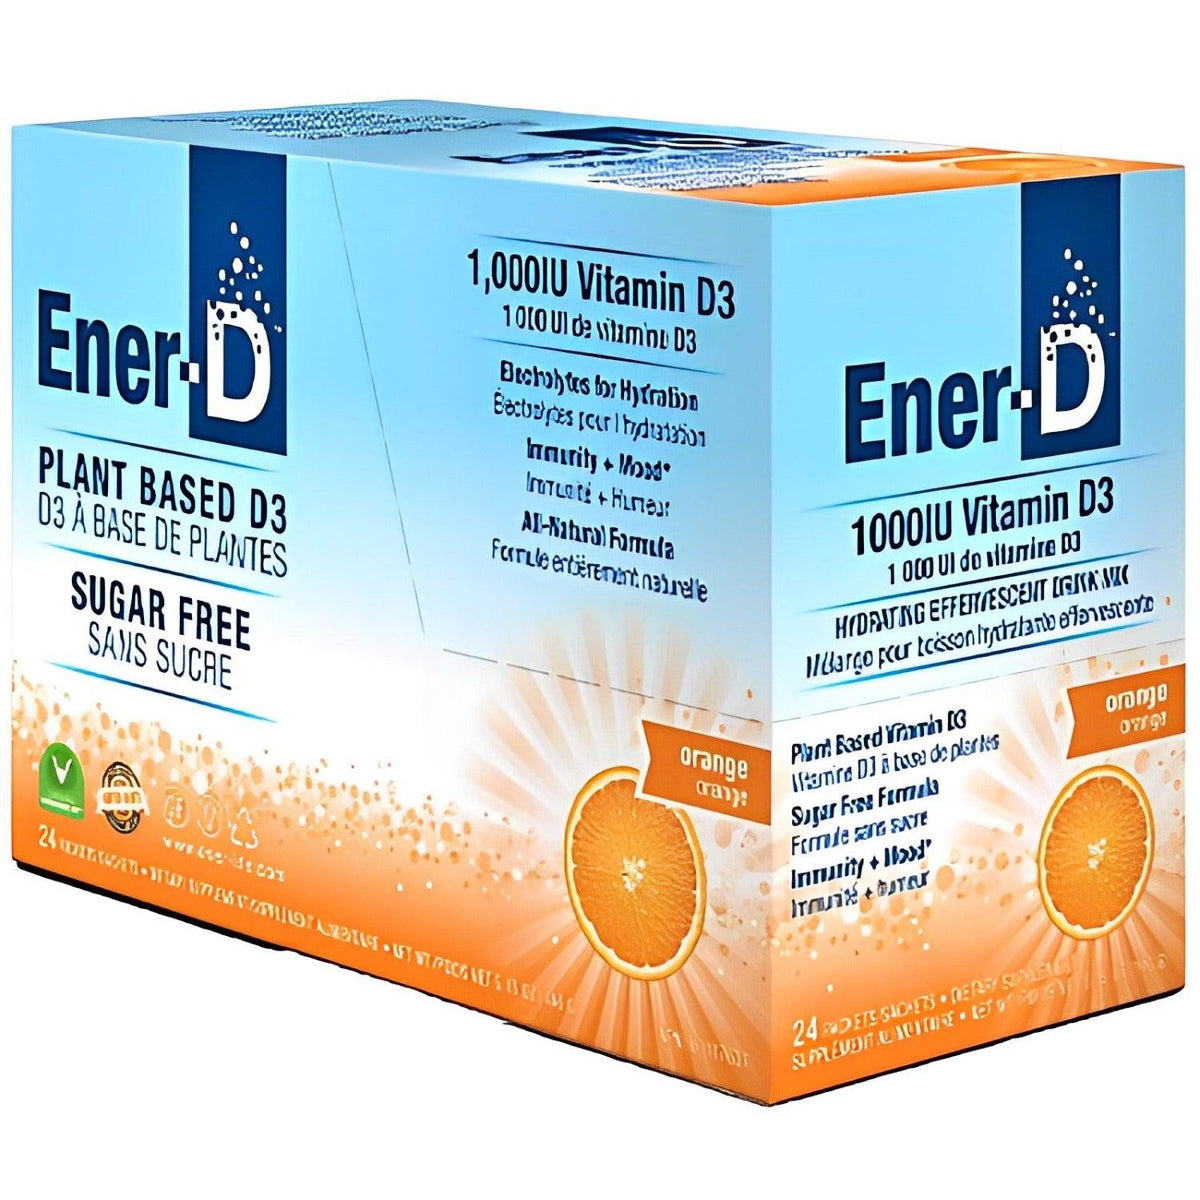 Ener-Life Vitamin D3 1000 IU Orange 24 Pack*Product Expiry November'2024* Vitamins - Vitamin D at Village Vitamin Store